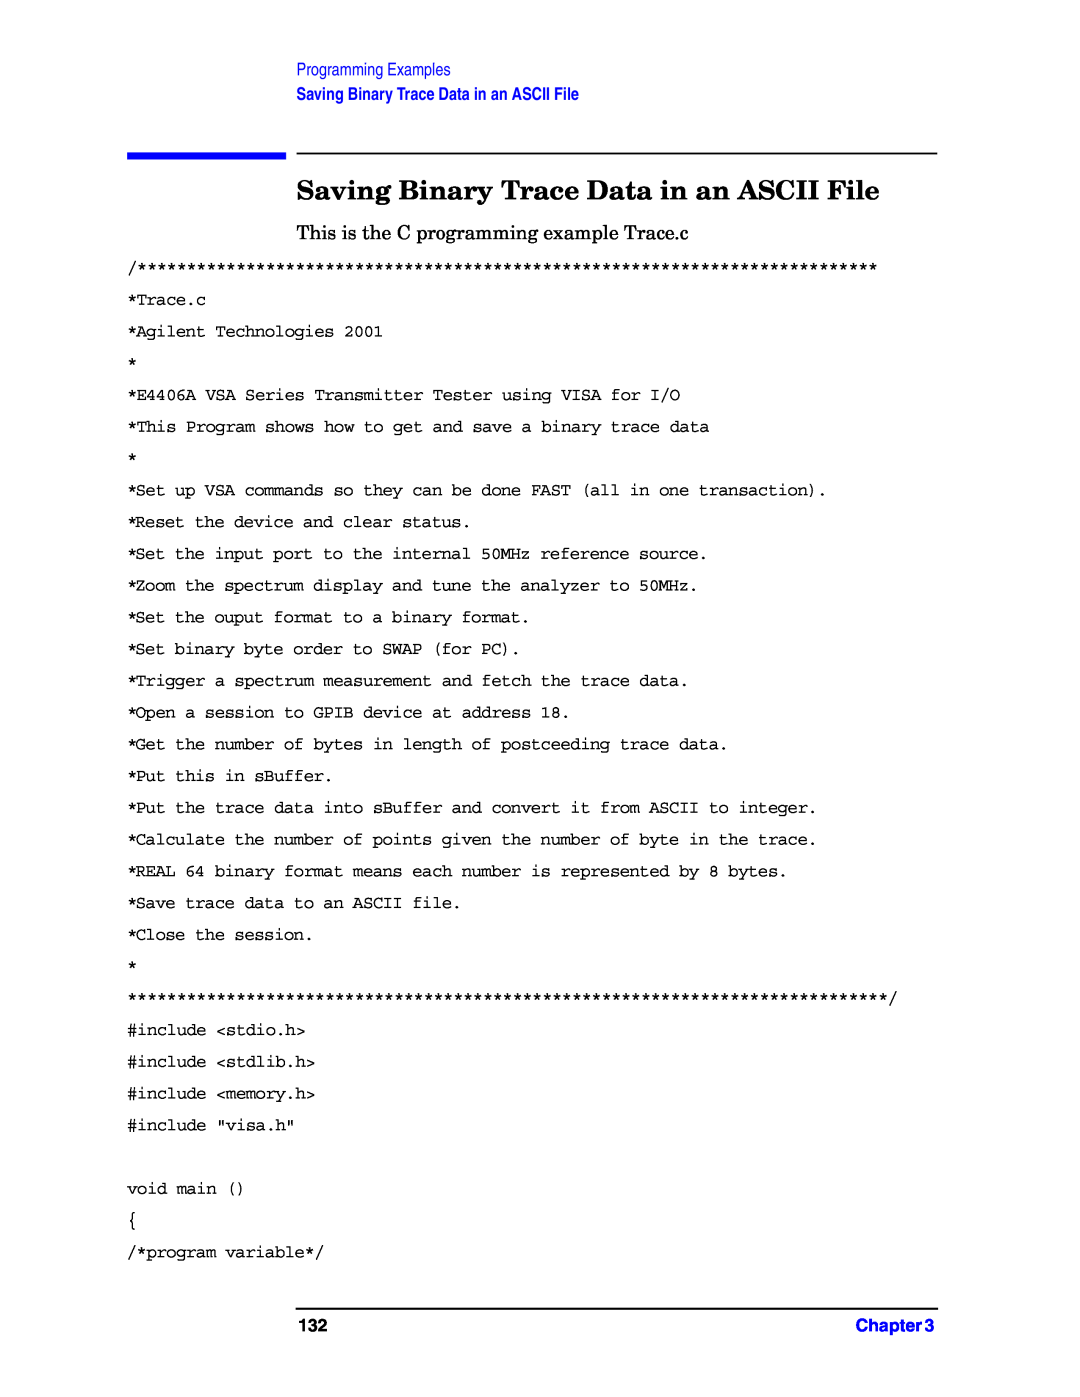 Agilent Technologies E4406A VSA manual Saving Binary Trace Data in an ASCII File, Programming Examples 